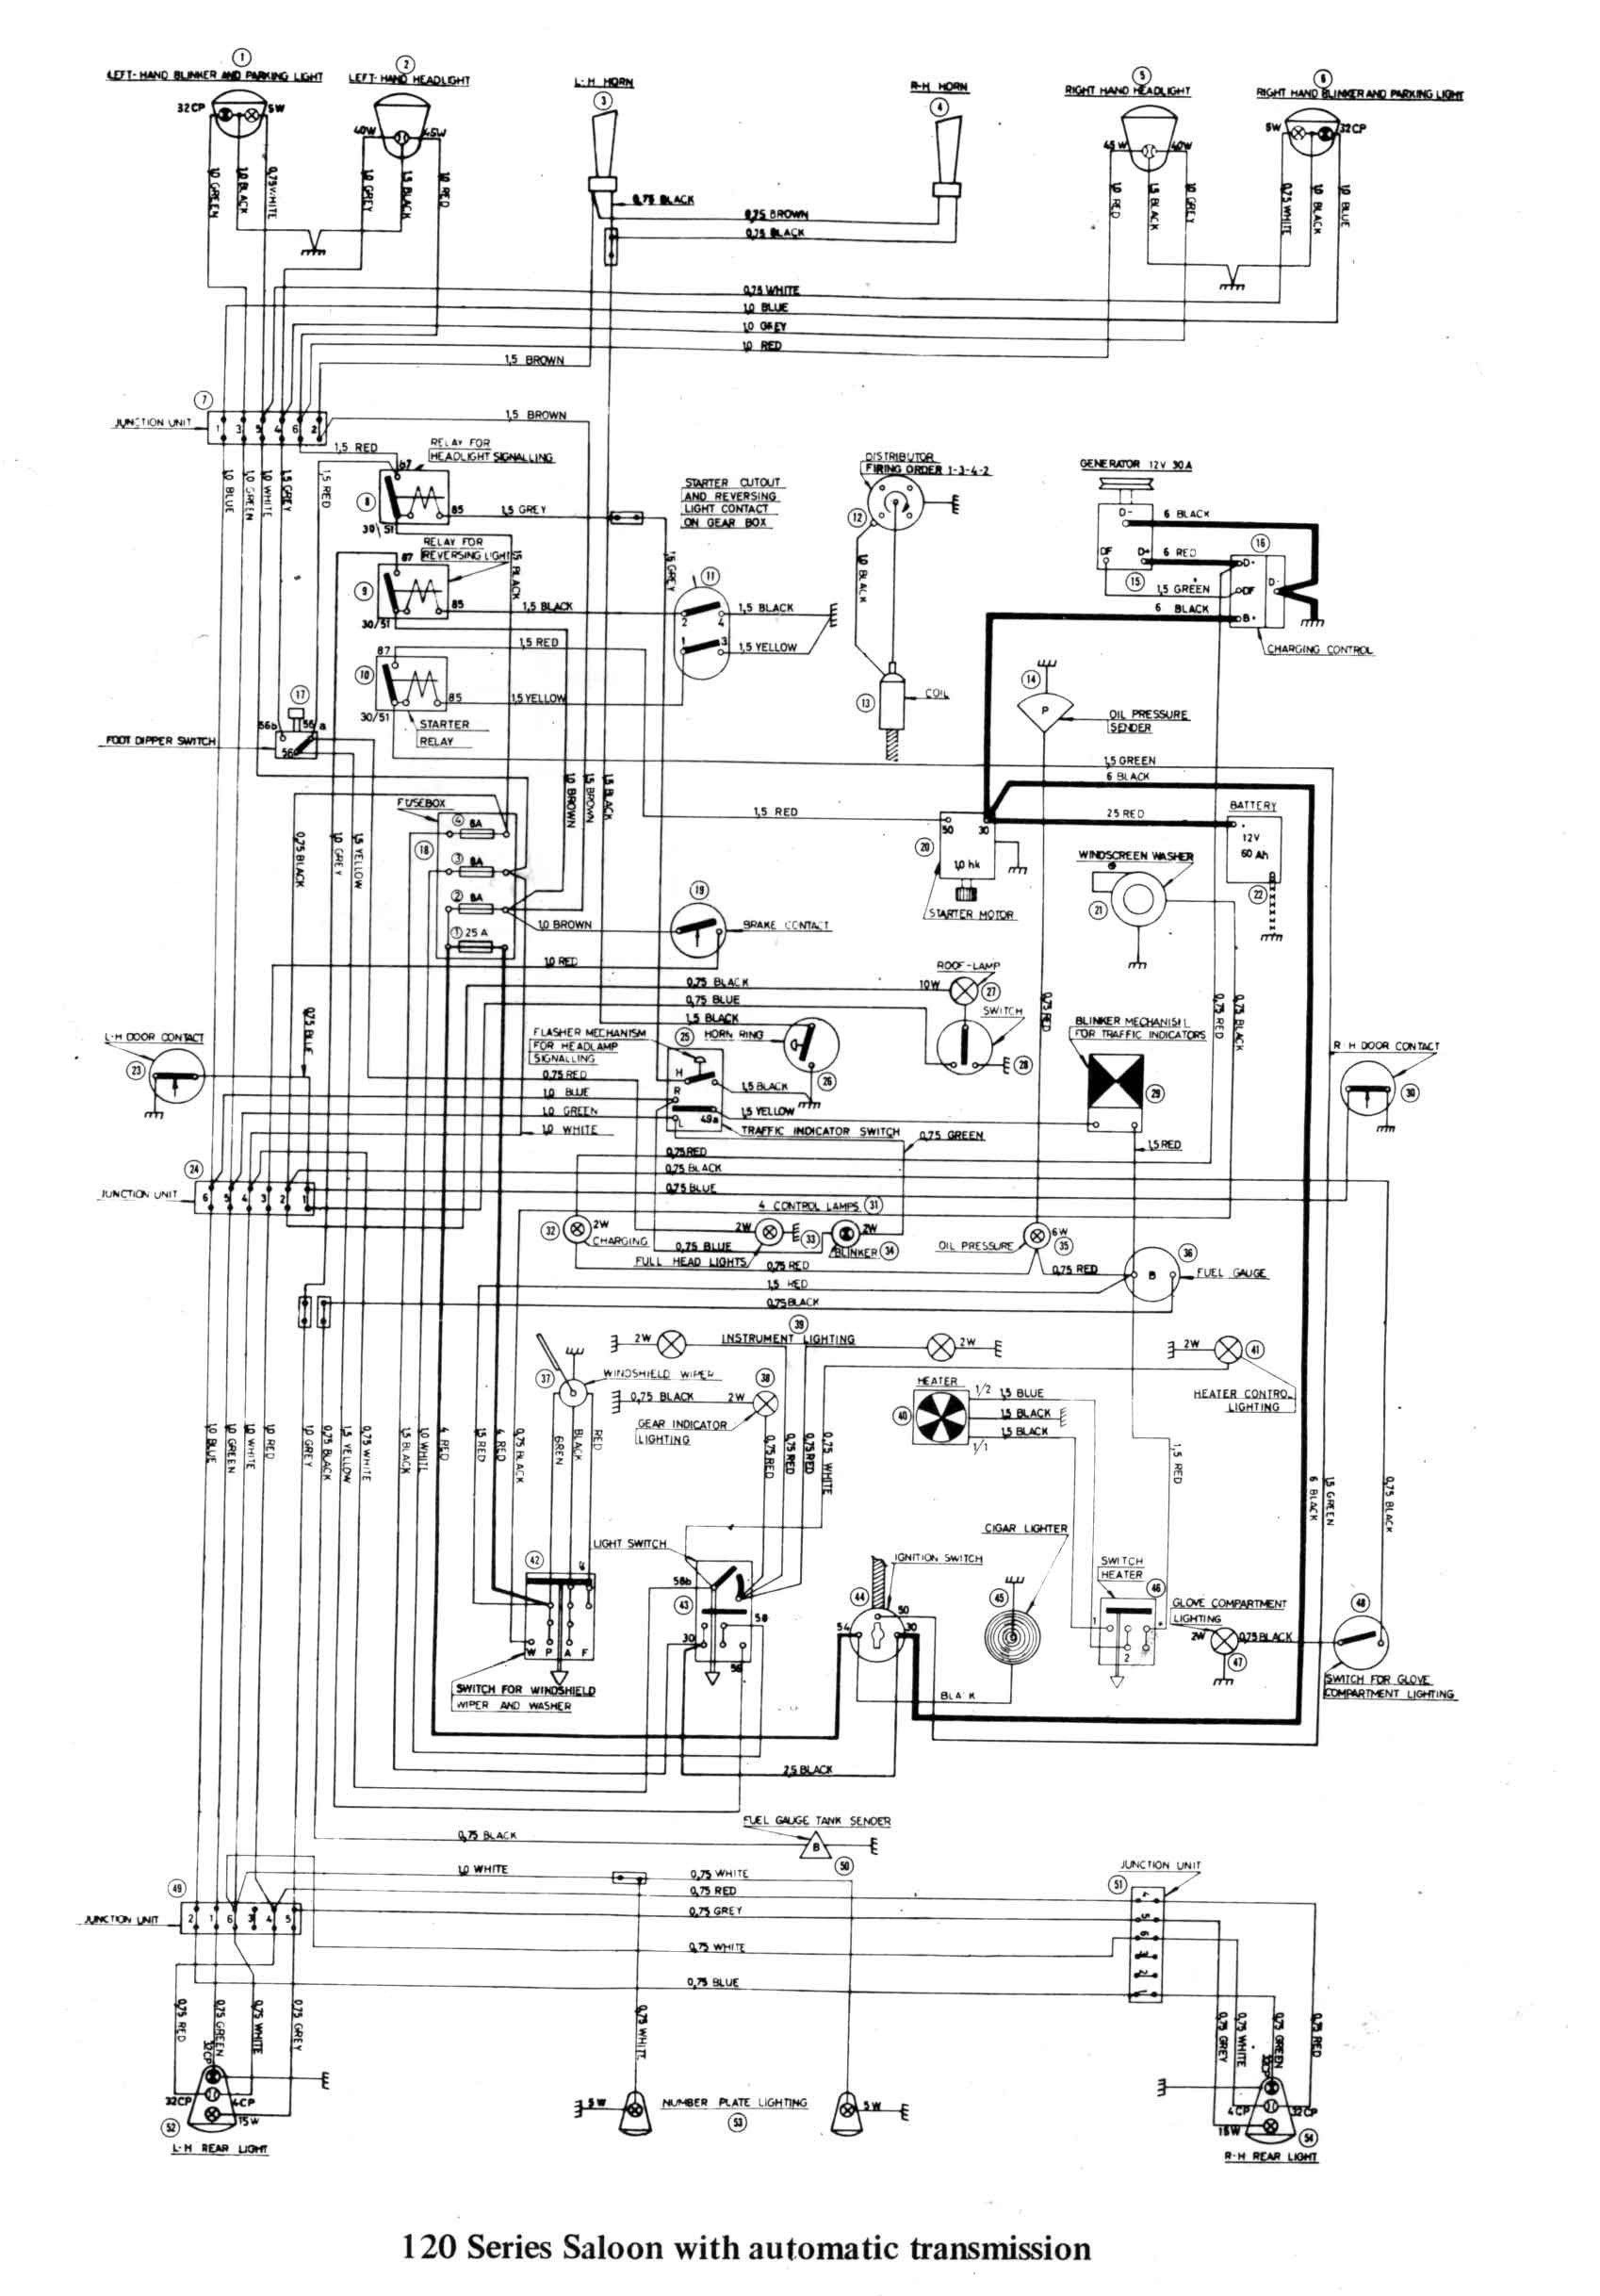 1 Wire Gm Alternator Wiring Diagram from mainetreasurechest.com